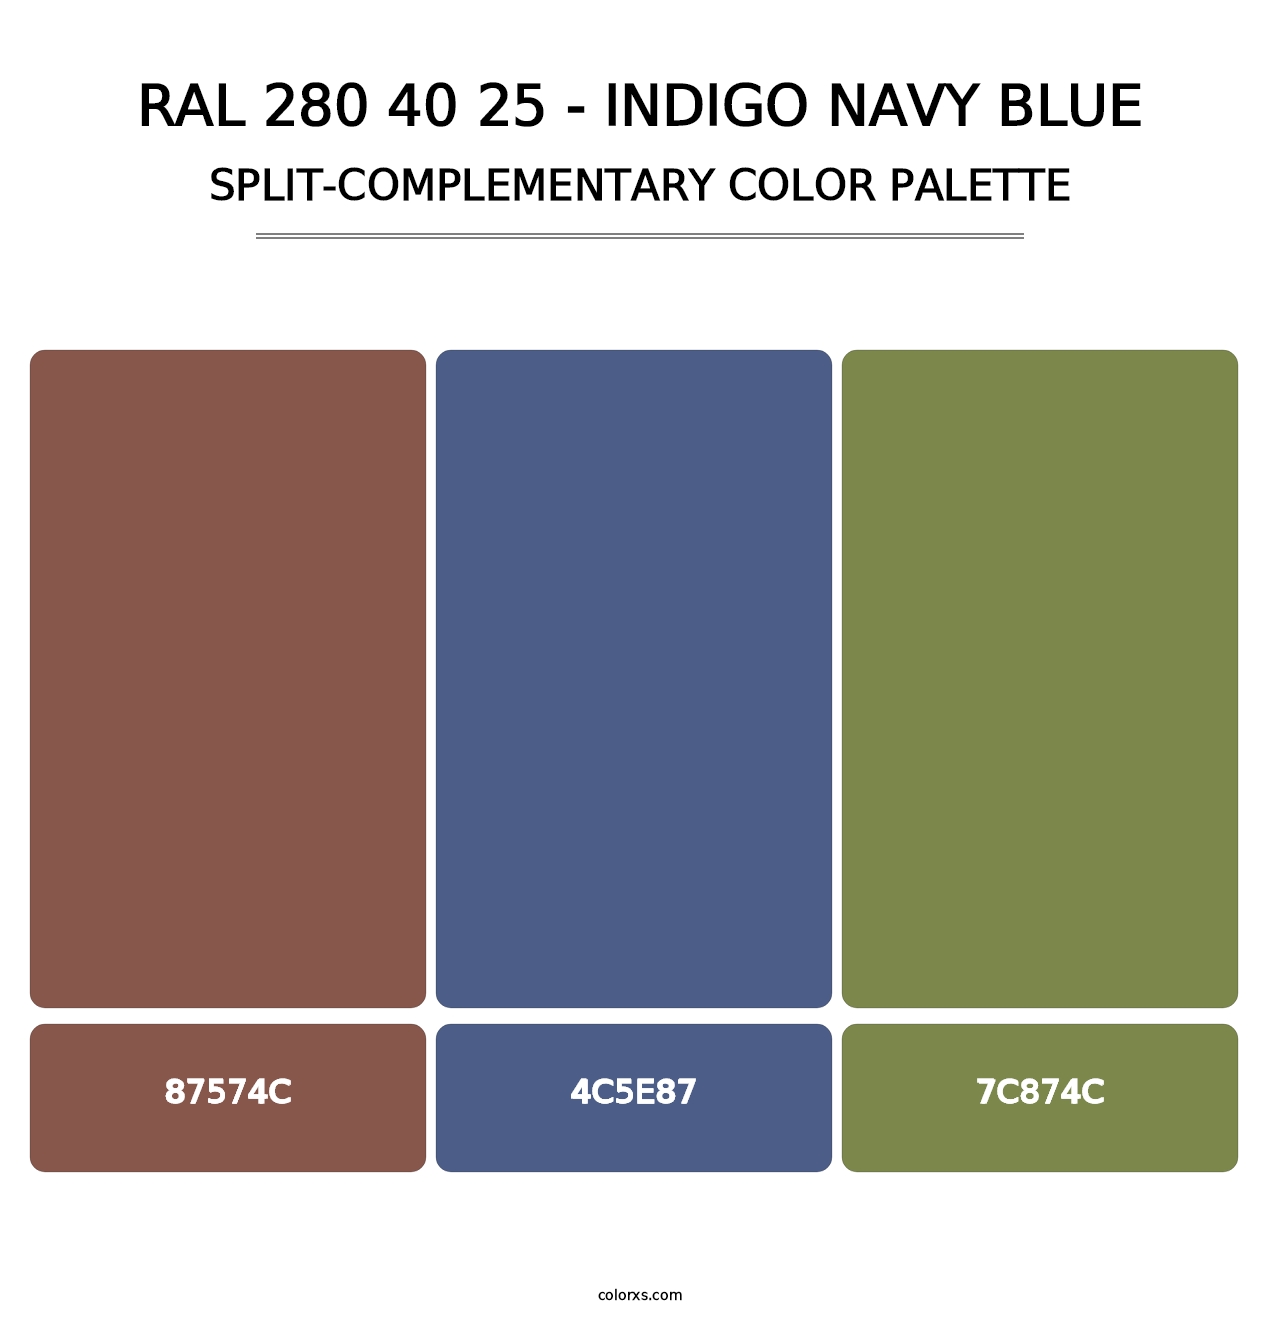 RAL 280 40 25 - Indigo Navy Blue - Split-Complementary Color Palette